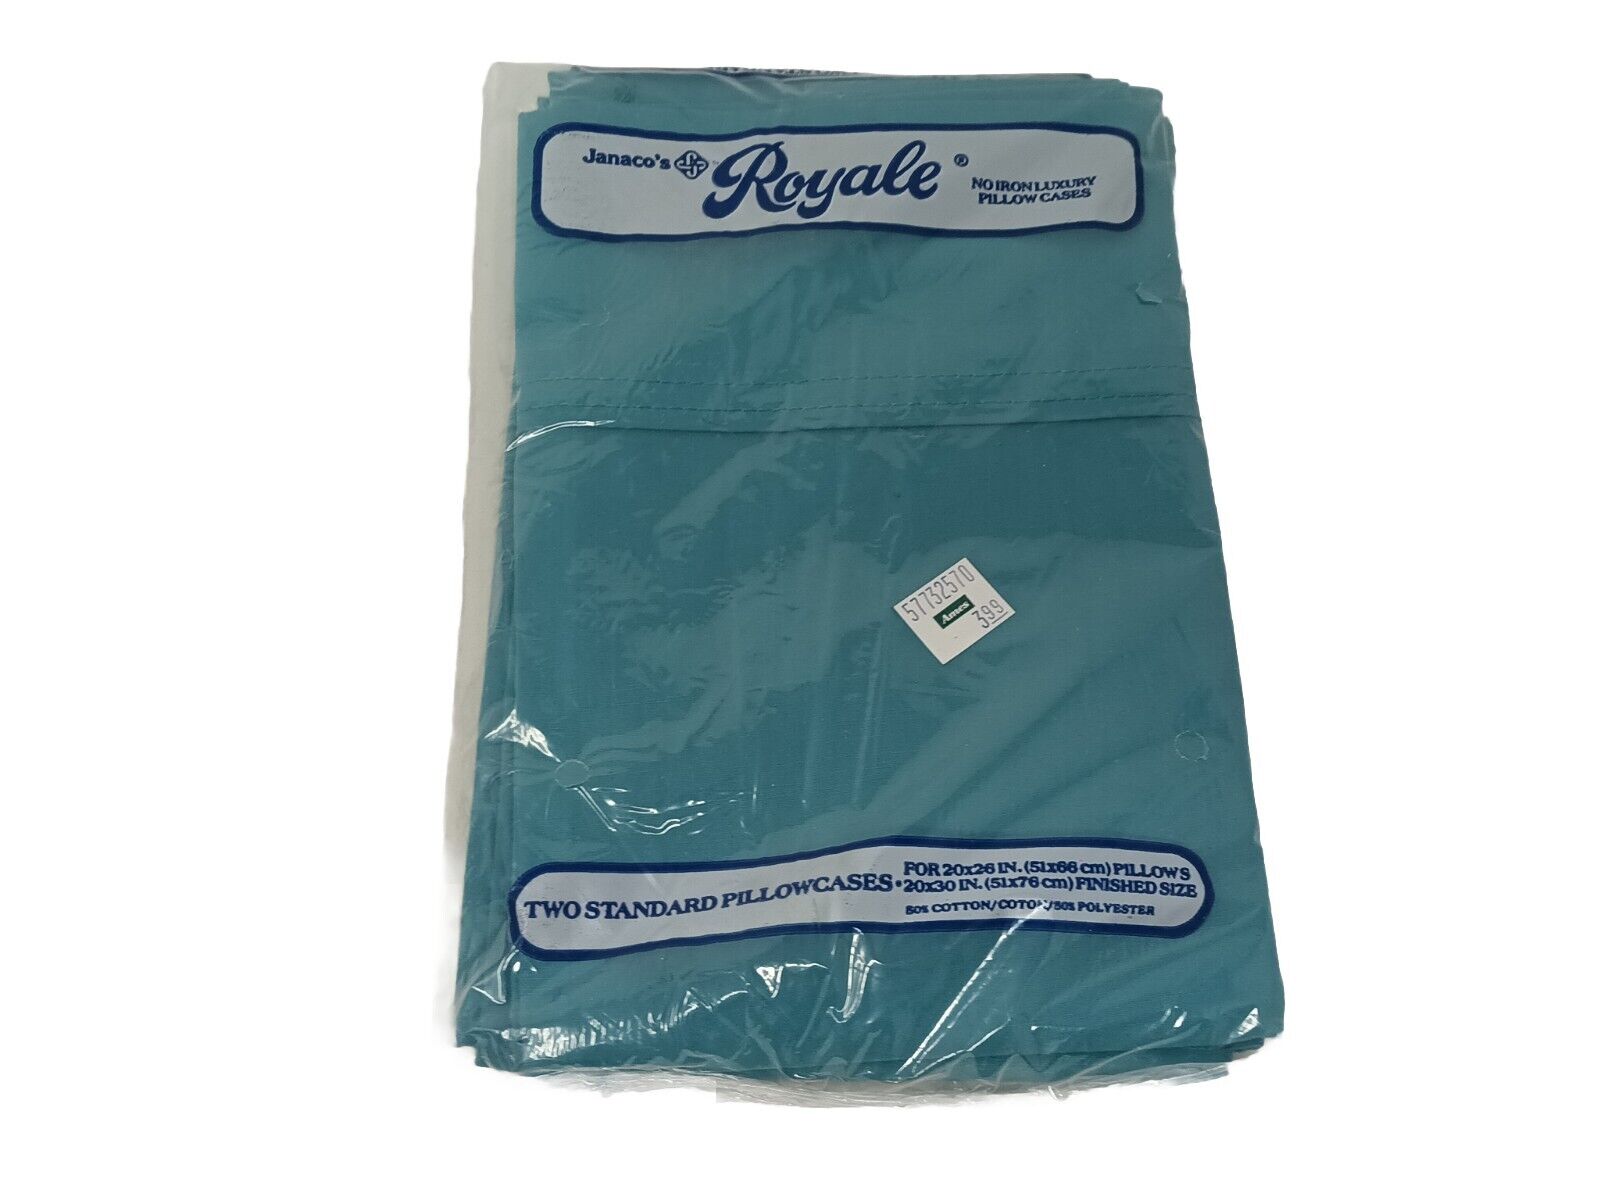 Vintage Janaco’s Royale Luxury Pillowcases NOS Solid Blue Set Of 2 Standard USA